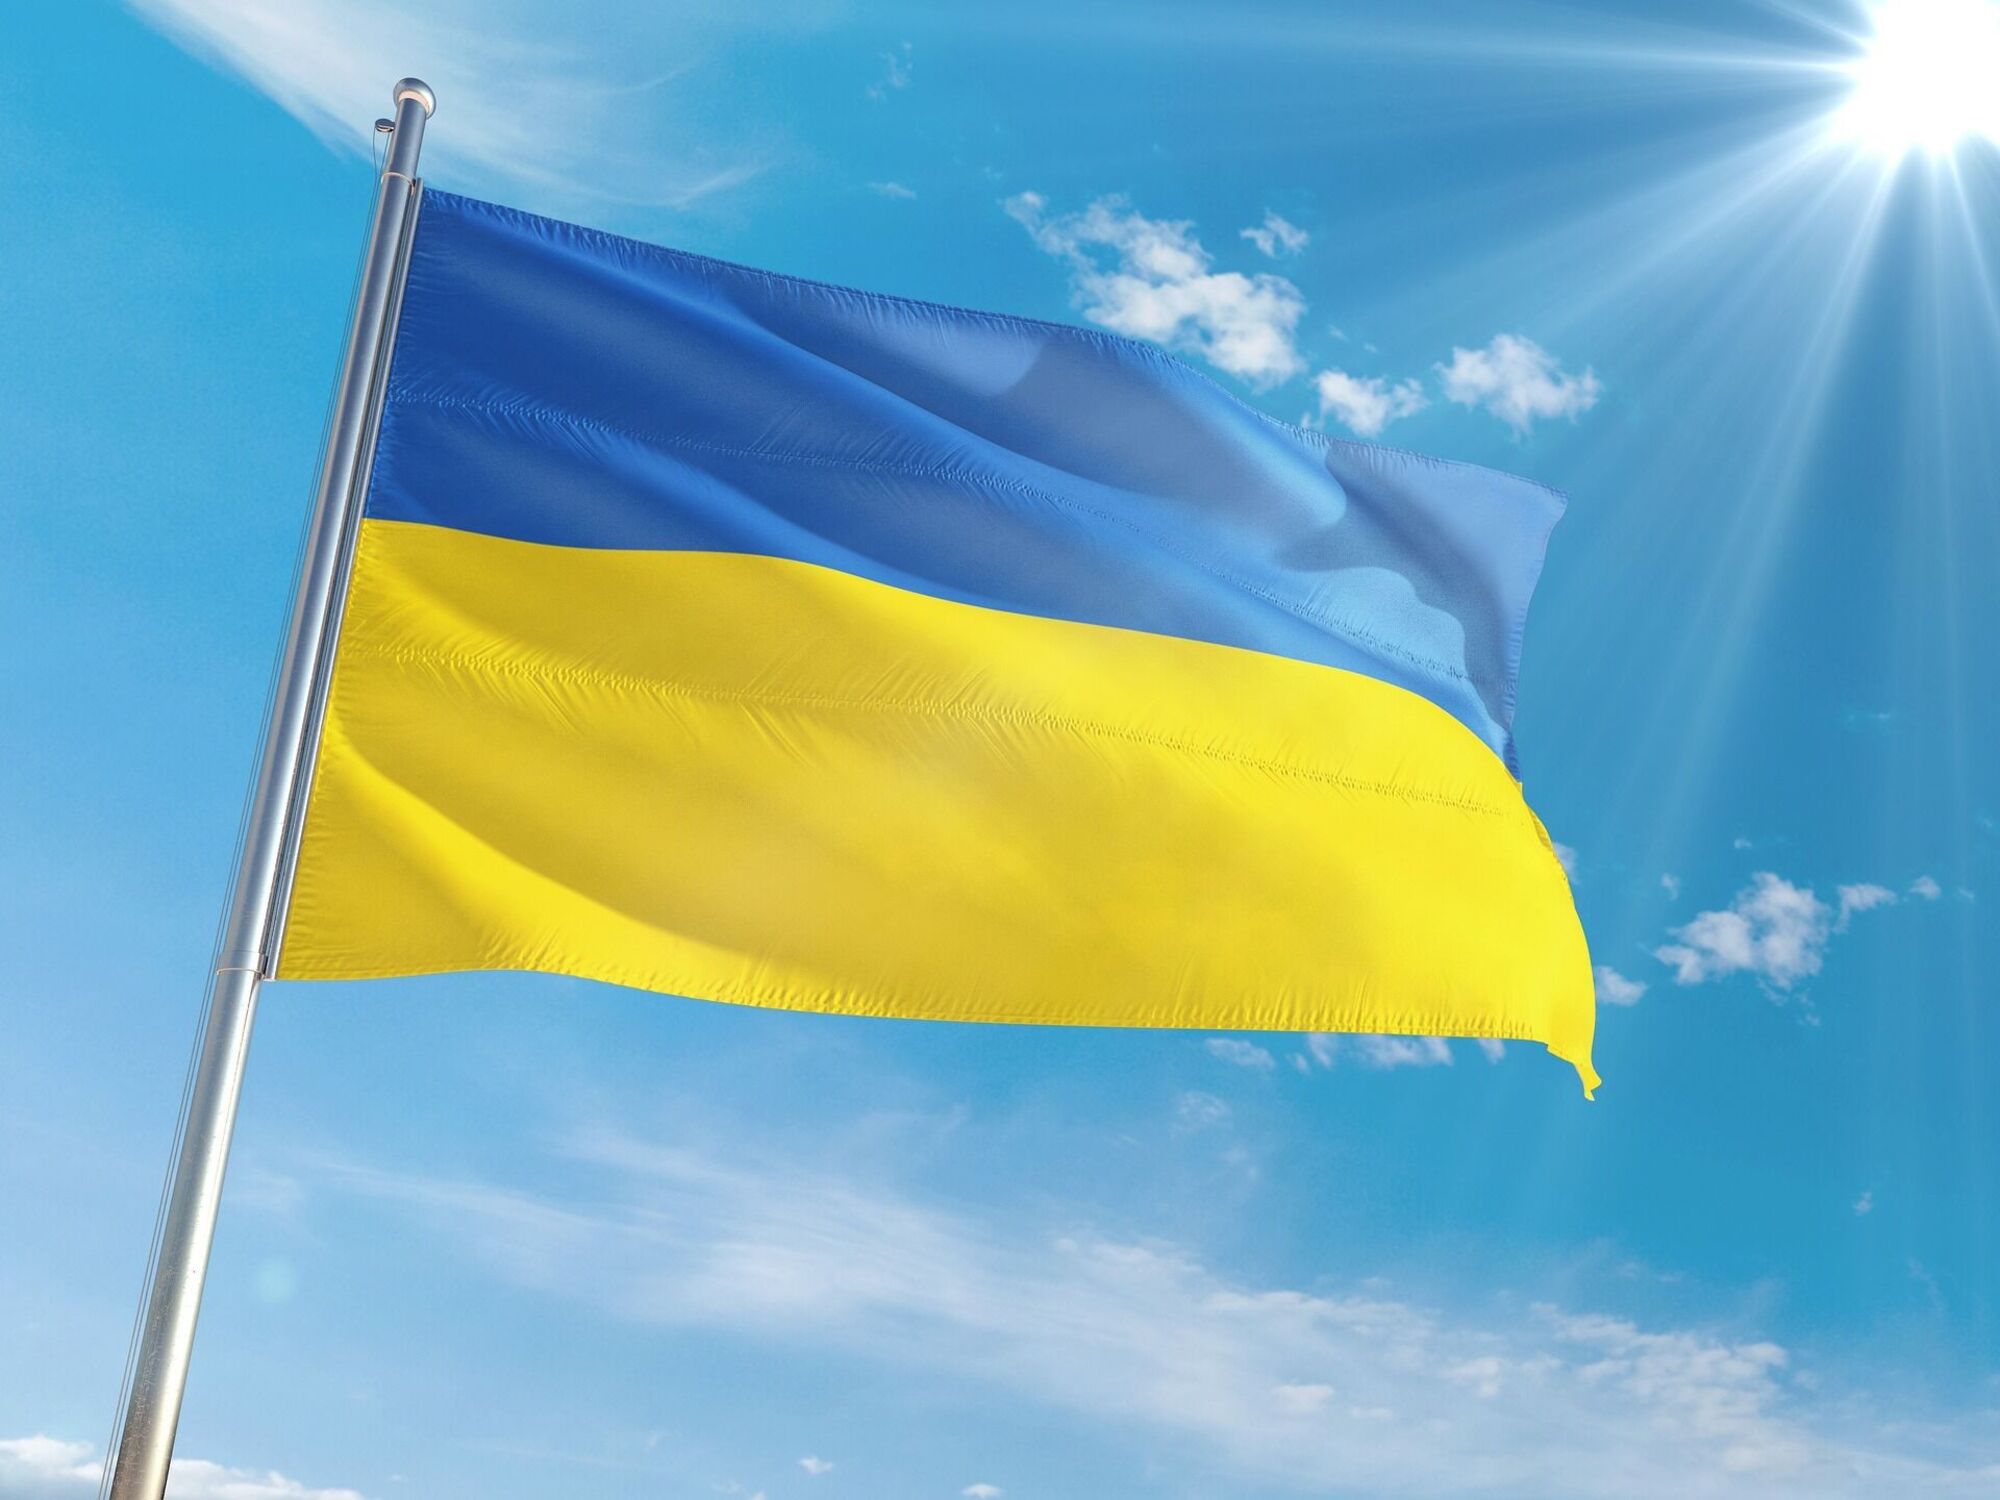 Ucraina: task force, attivi numeri per imprese